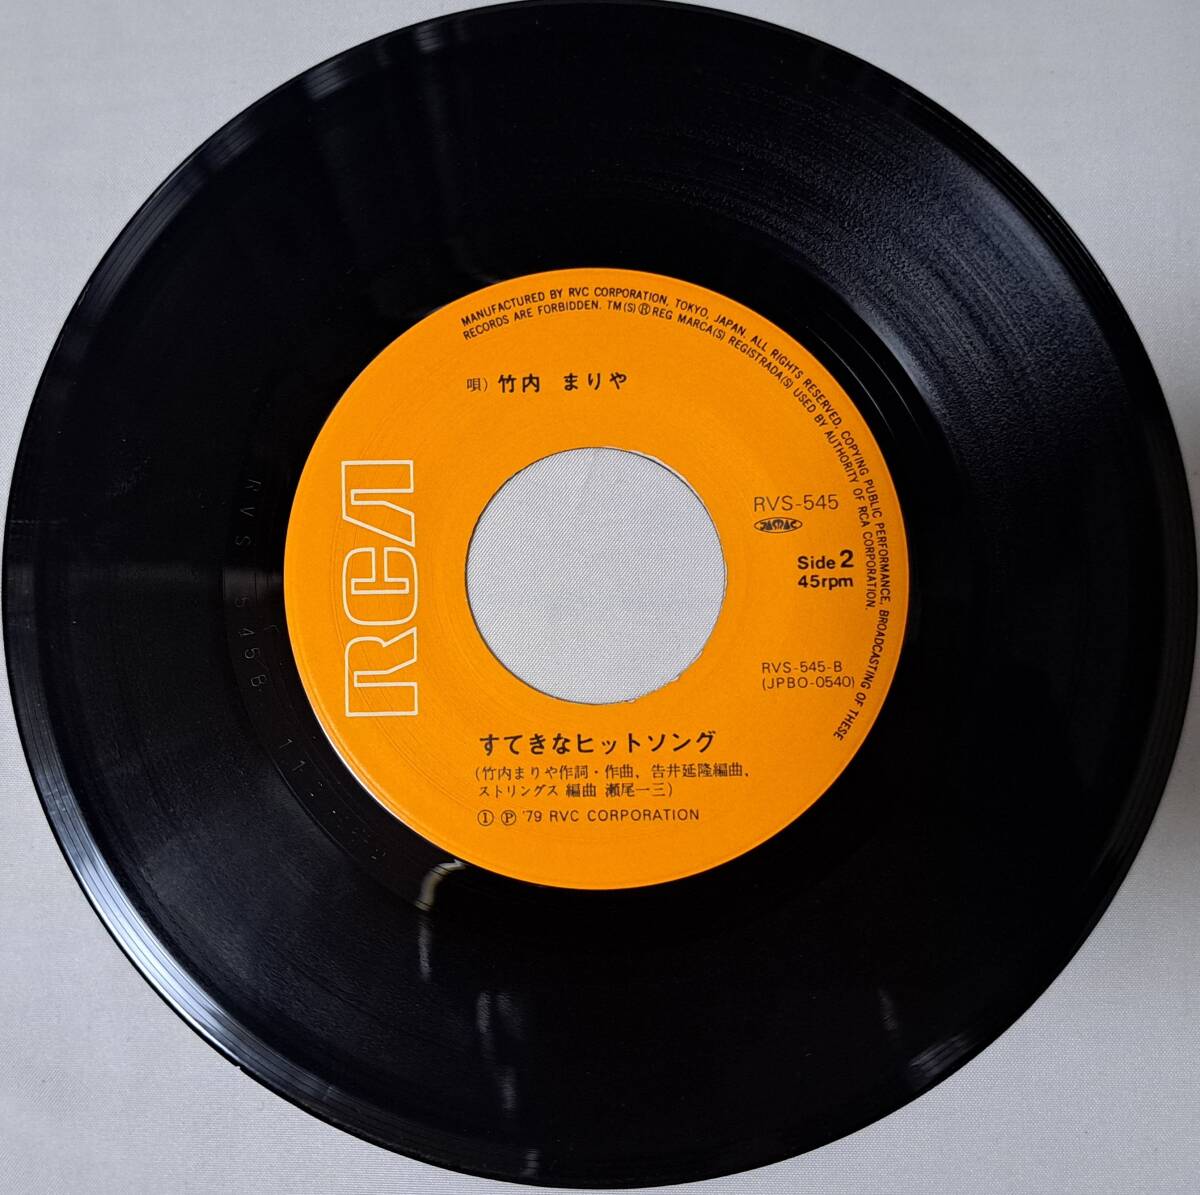  Takeuchi Mariya : Dream *ob* You ~ lemon lime. blue manner domestic record used analogue EP single record record 1979 year RVS-545 M2-KDO-1468